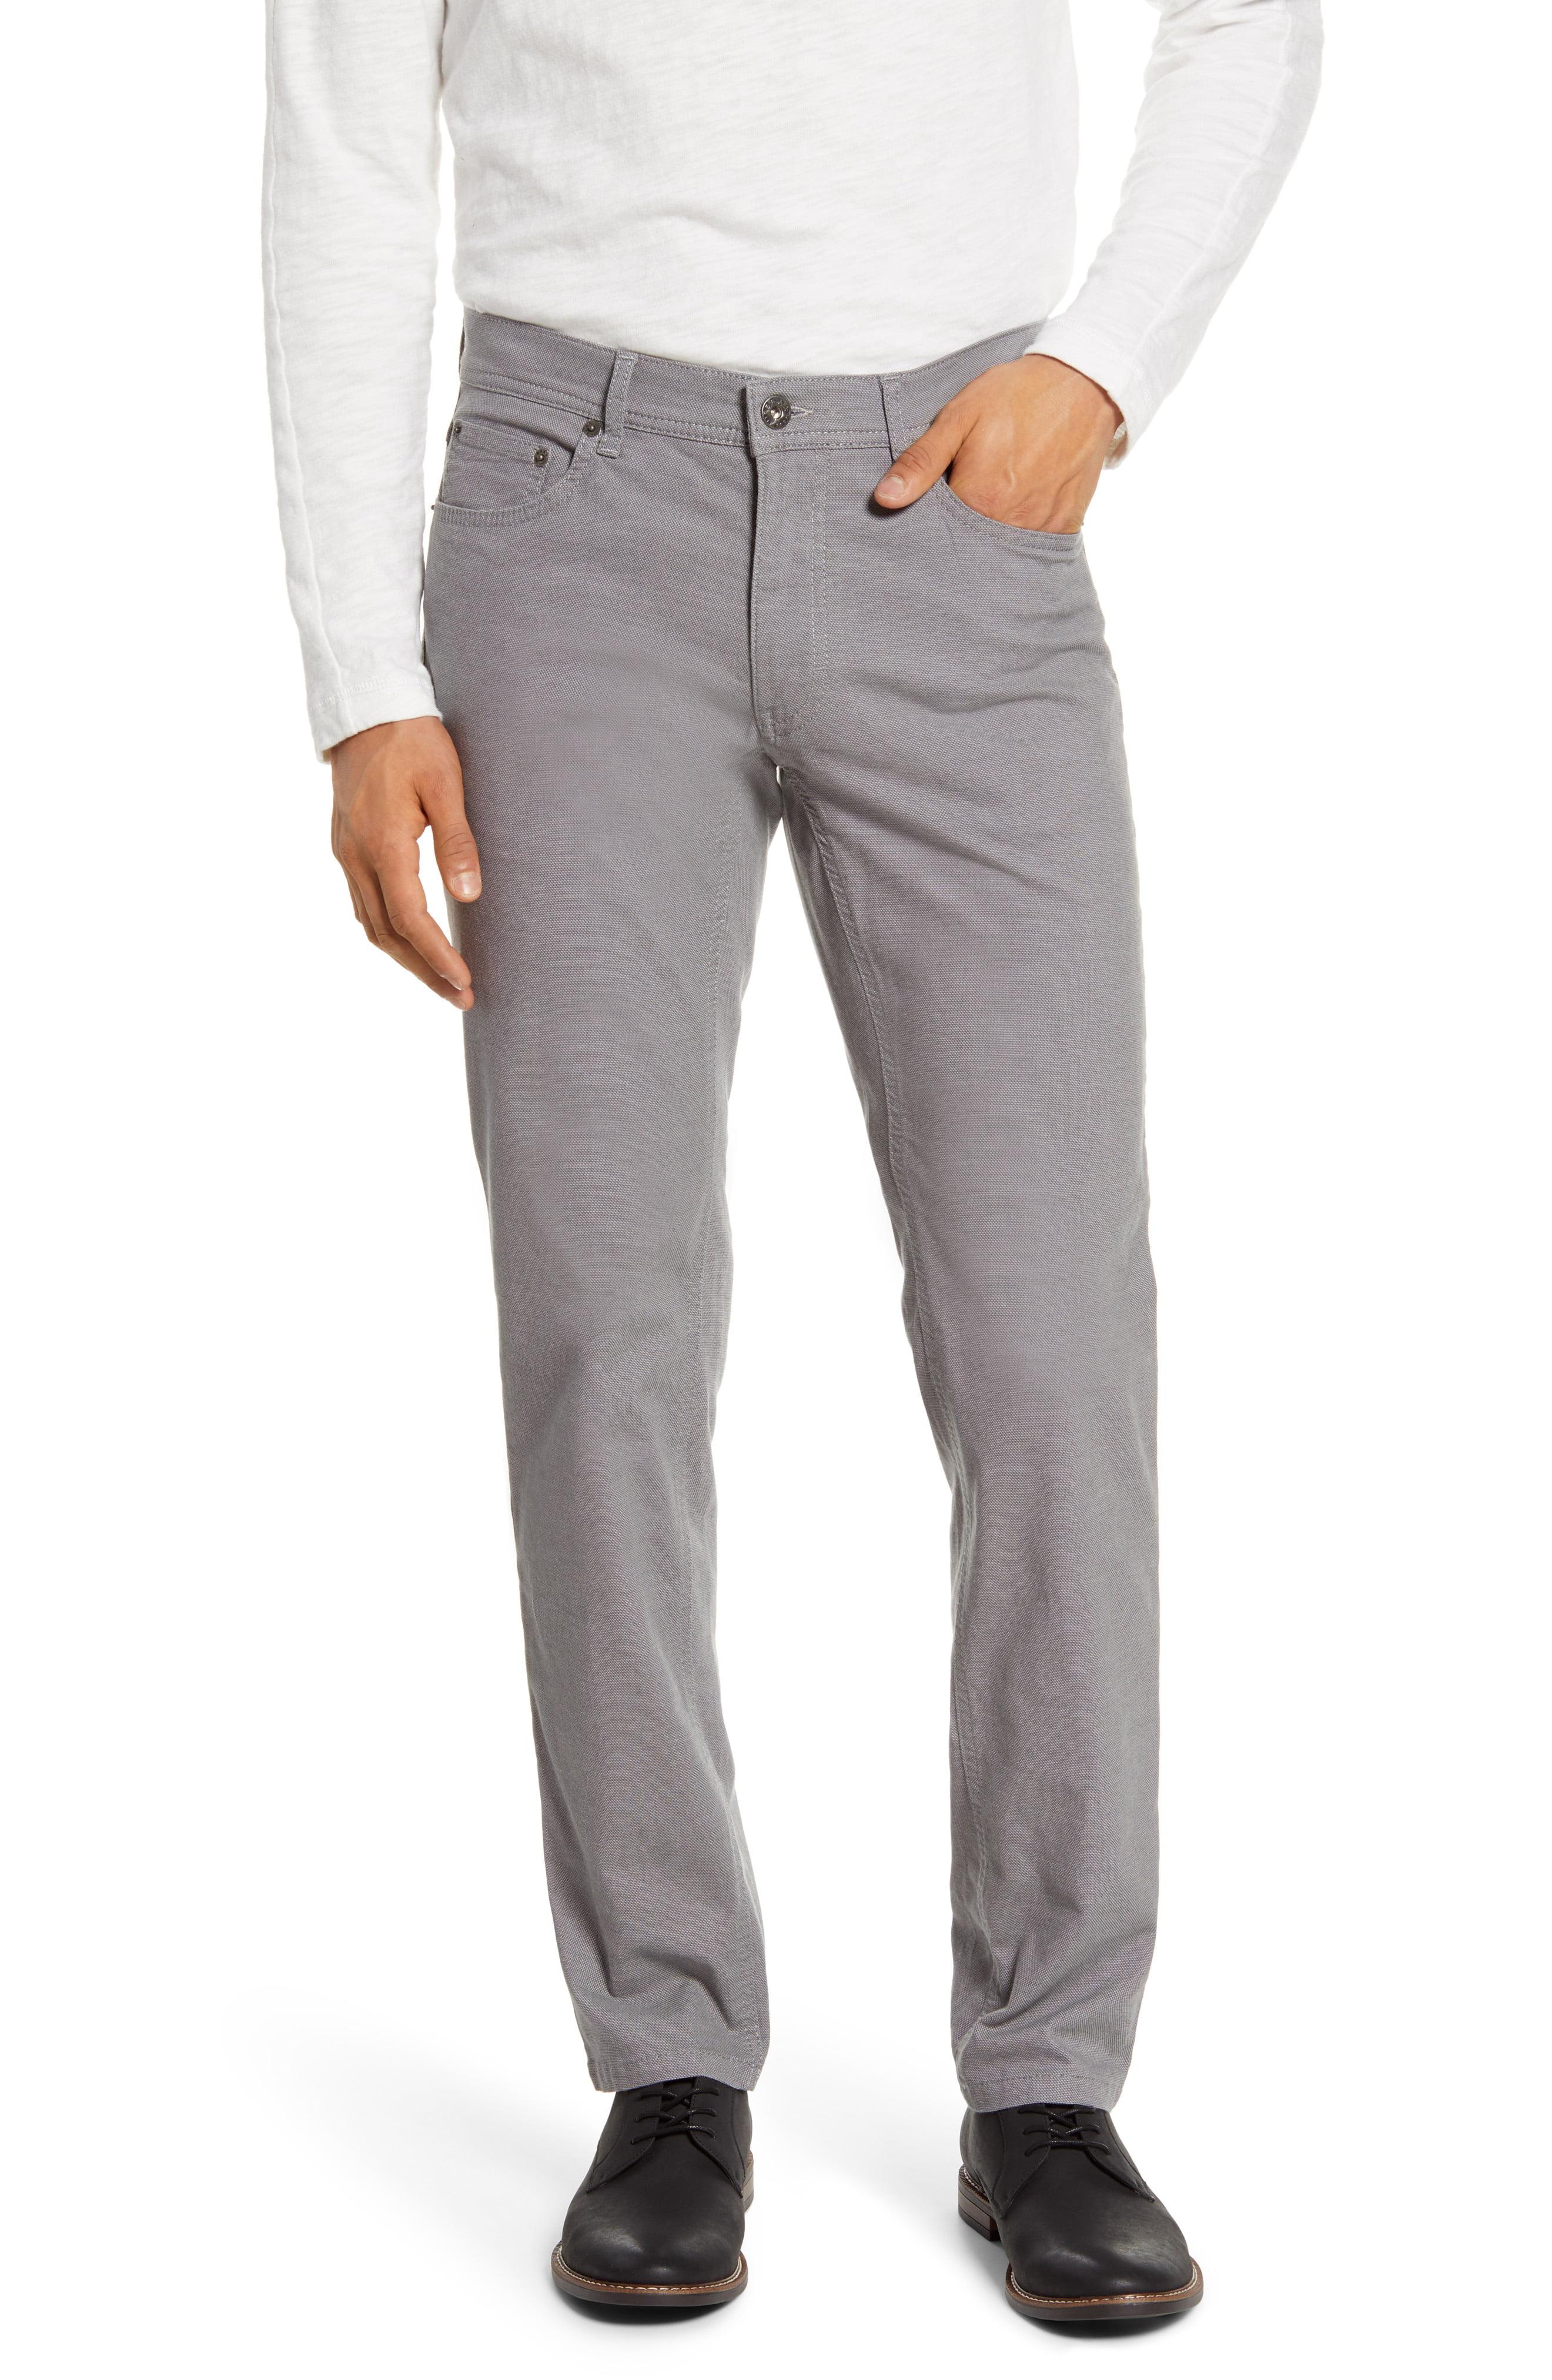 Brax Cooper Fancy Straight Leg Pants in Grey (Gray) for Men - Lyst